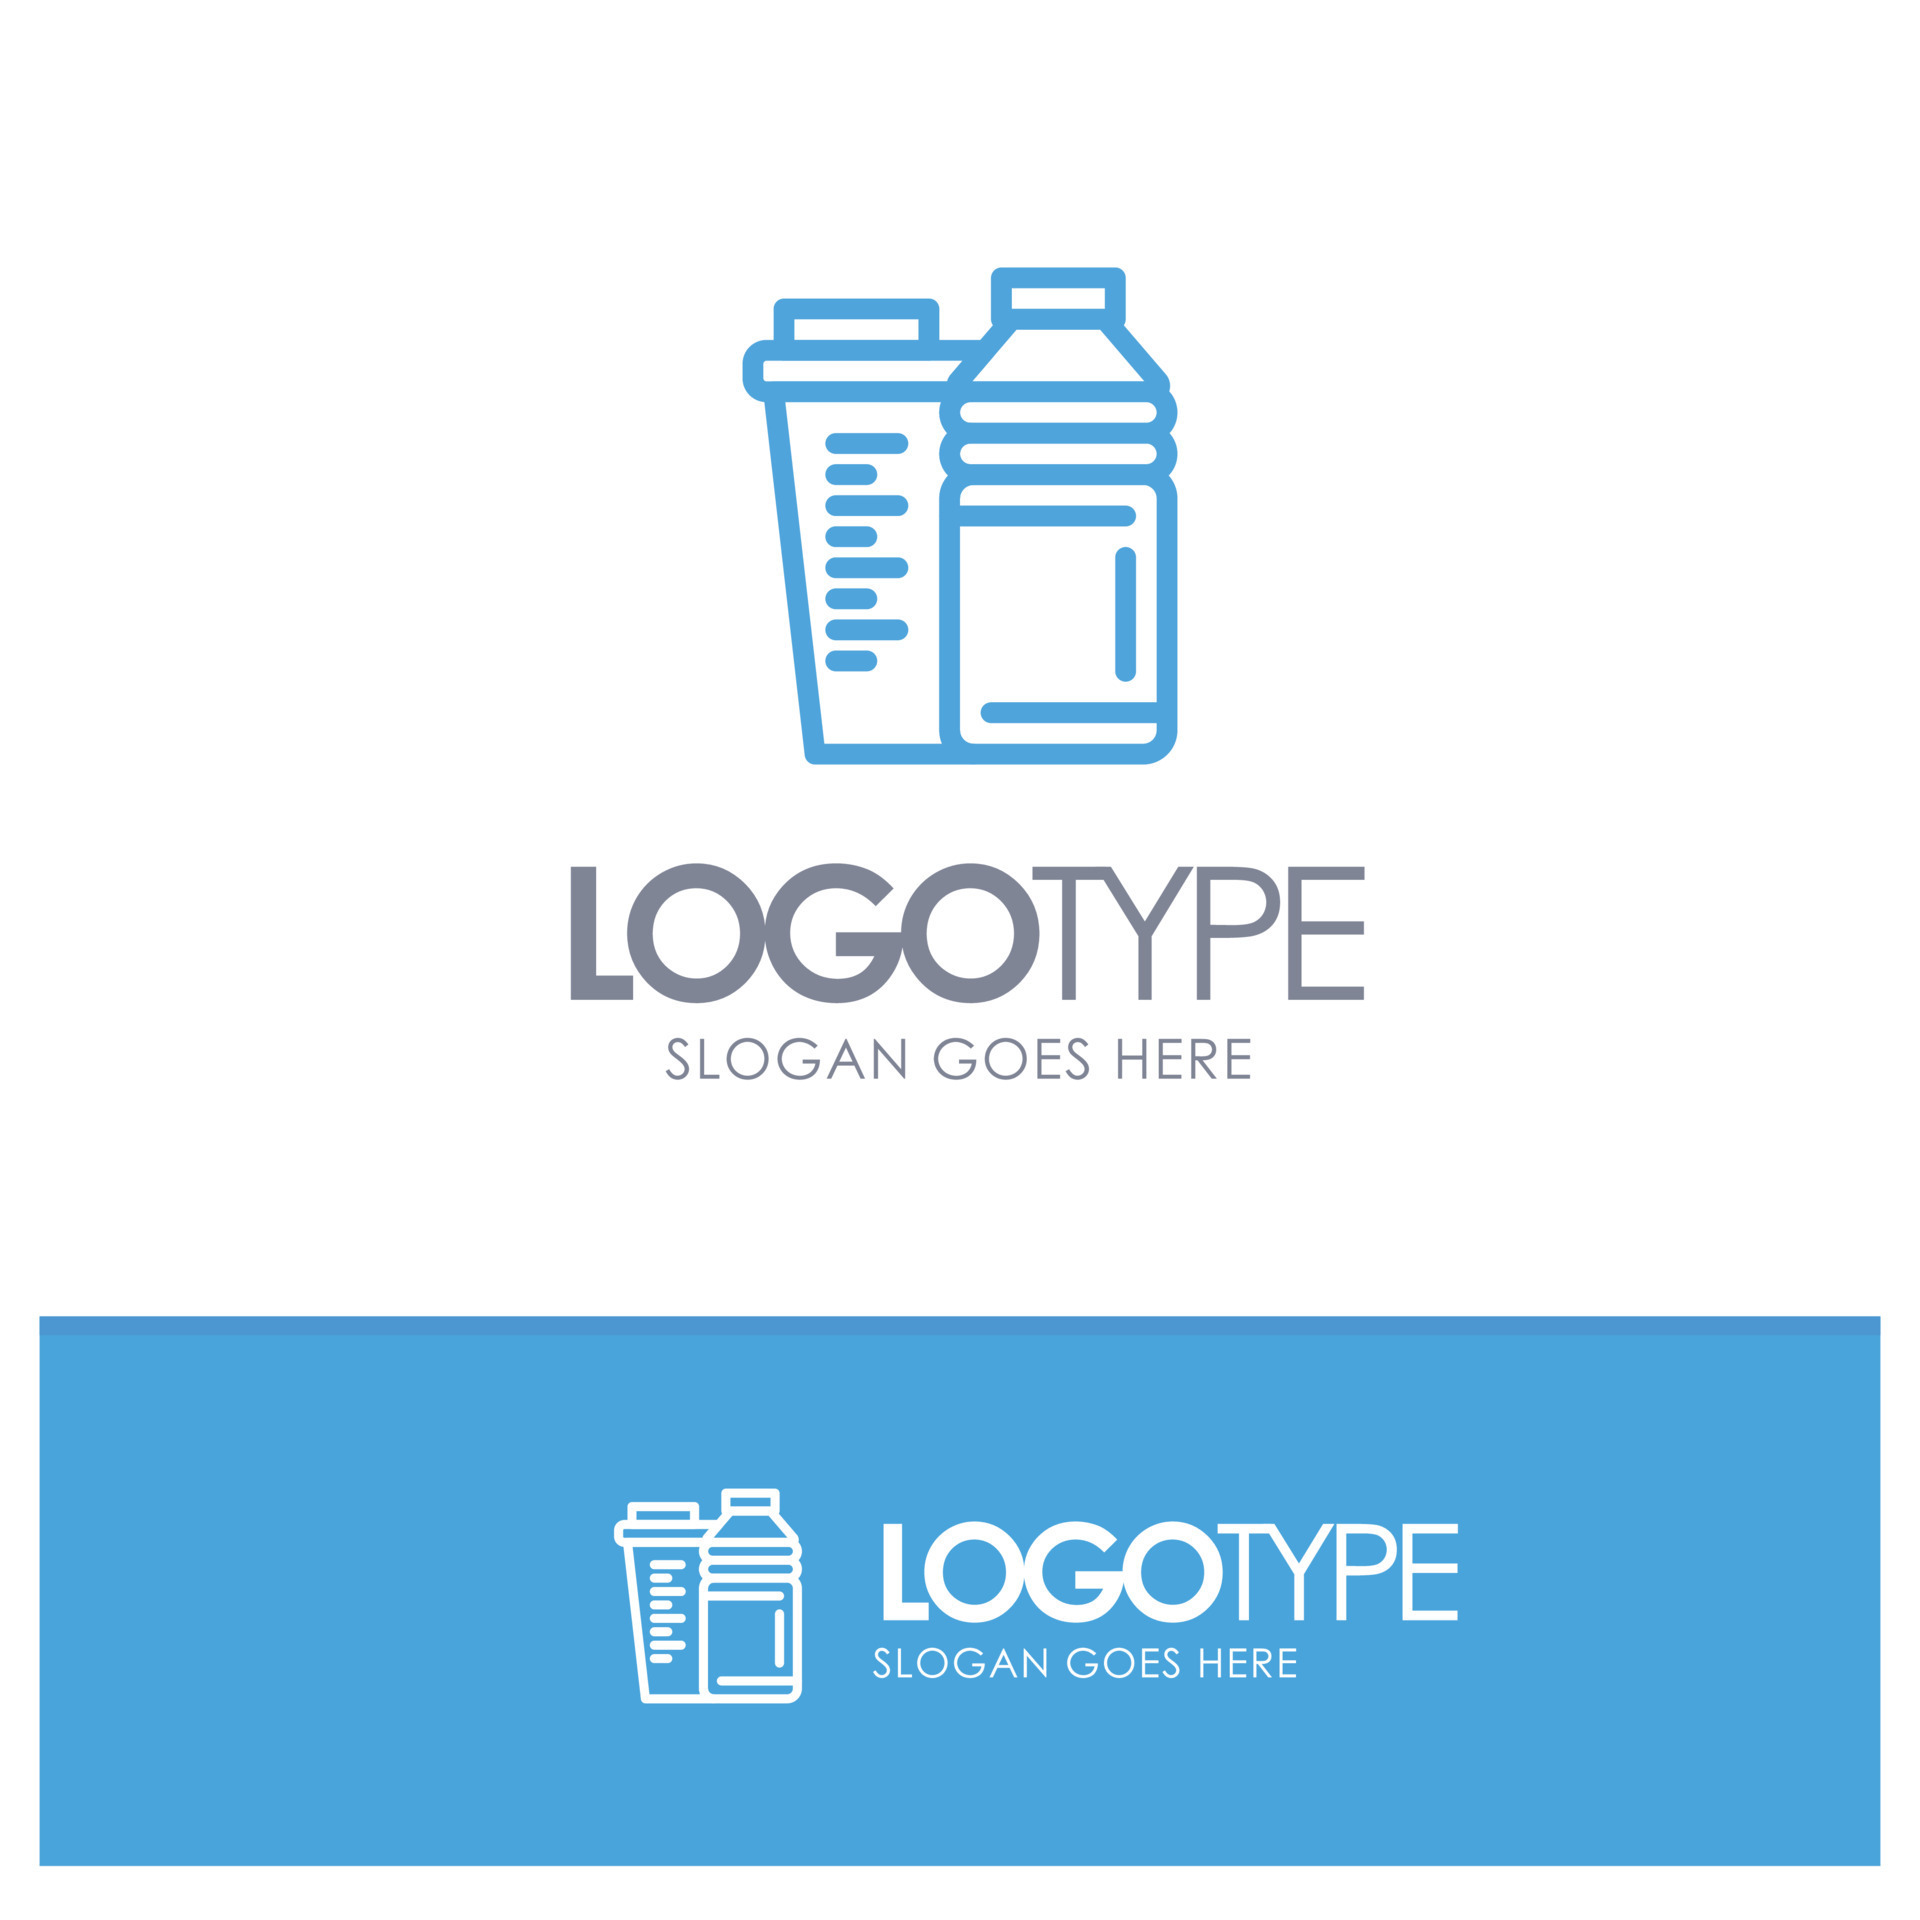 https://static.vecteezy.com/system/resources/previews/013/436/381/original/bottle-drink-energy-shaker-sport-blue-outline-logo-with-place-for-tagline-free-vector.jpg